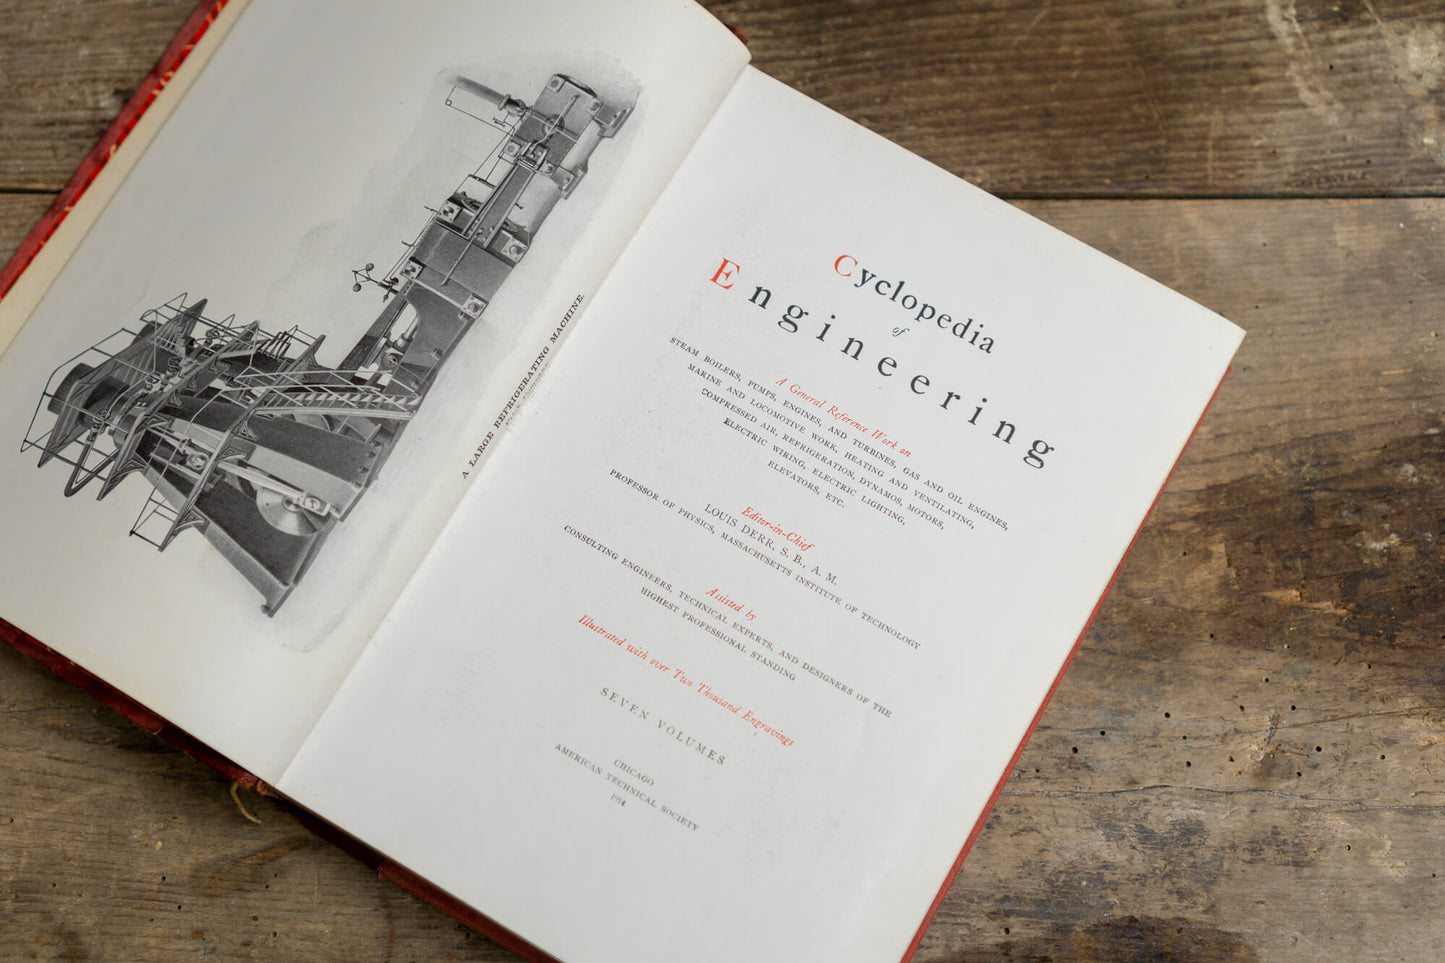 'Cyclopedia of Engineering' Book